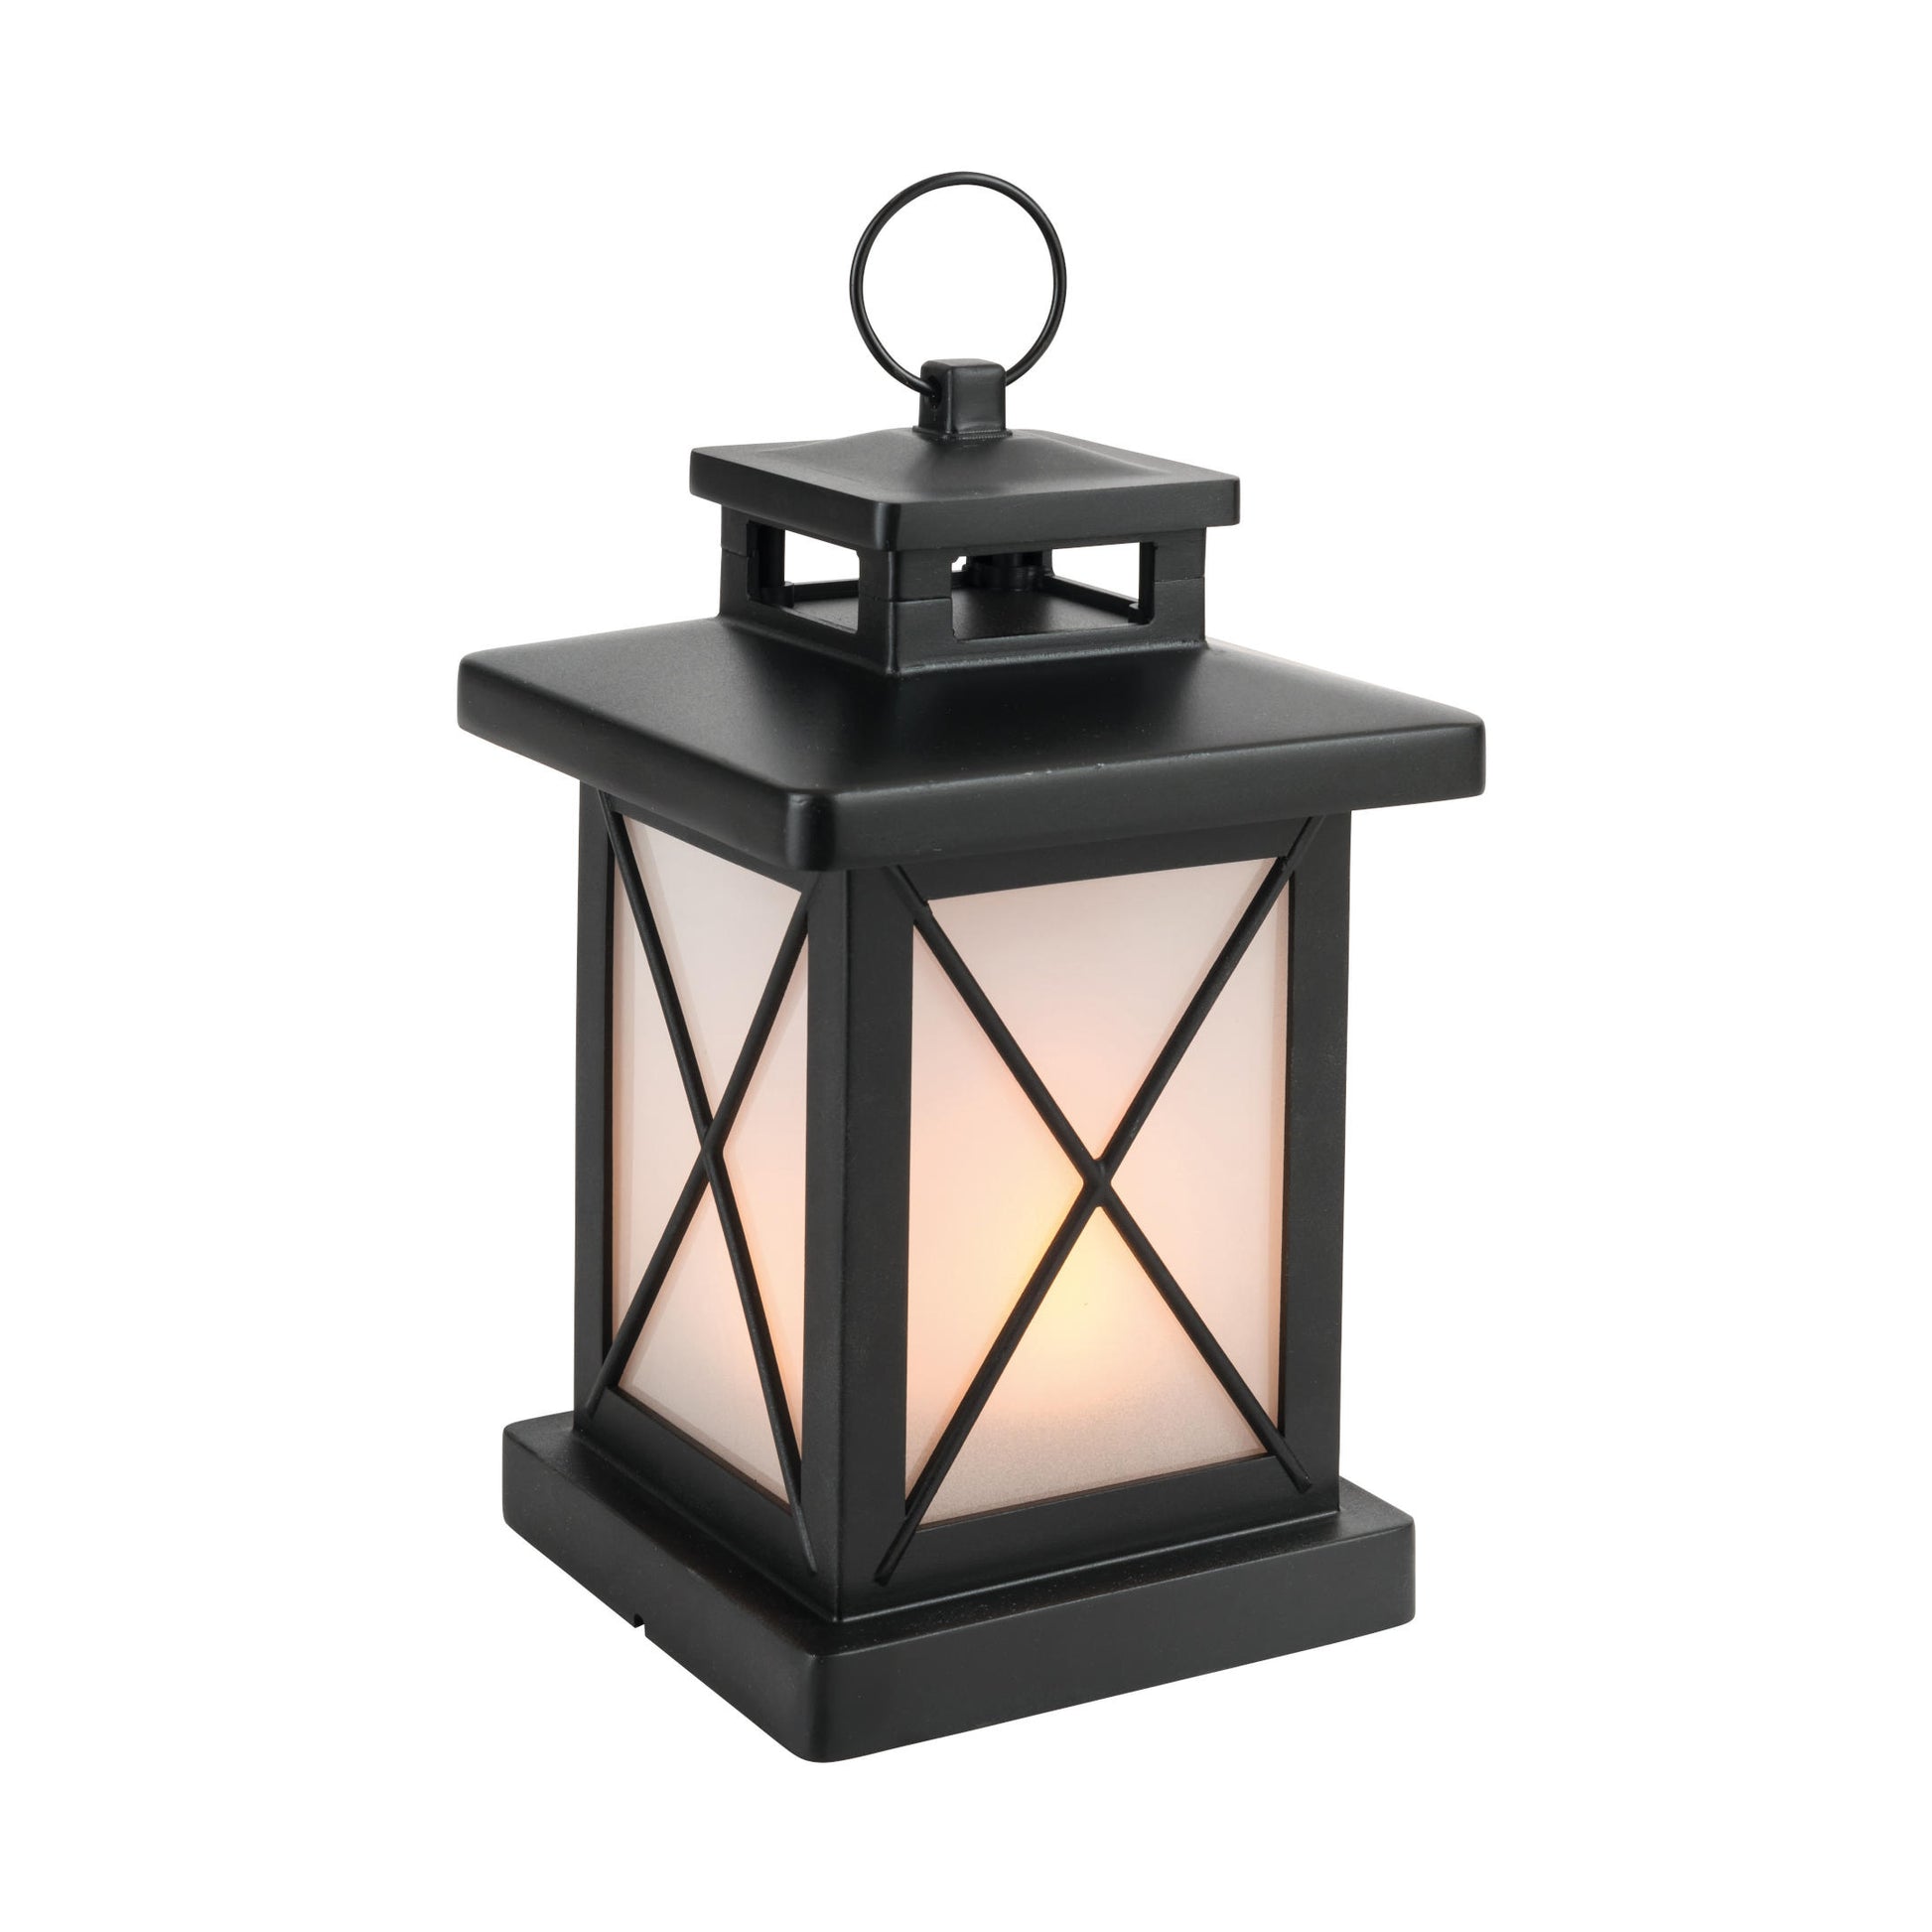 Flickering Black Lantern - LED lampáš s mihotajúcim sa efektom plameňa od The Outdoor Living Company